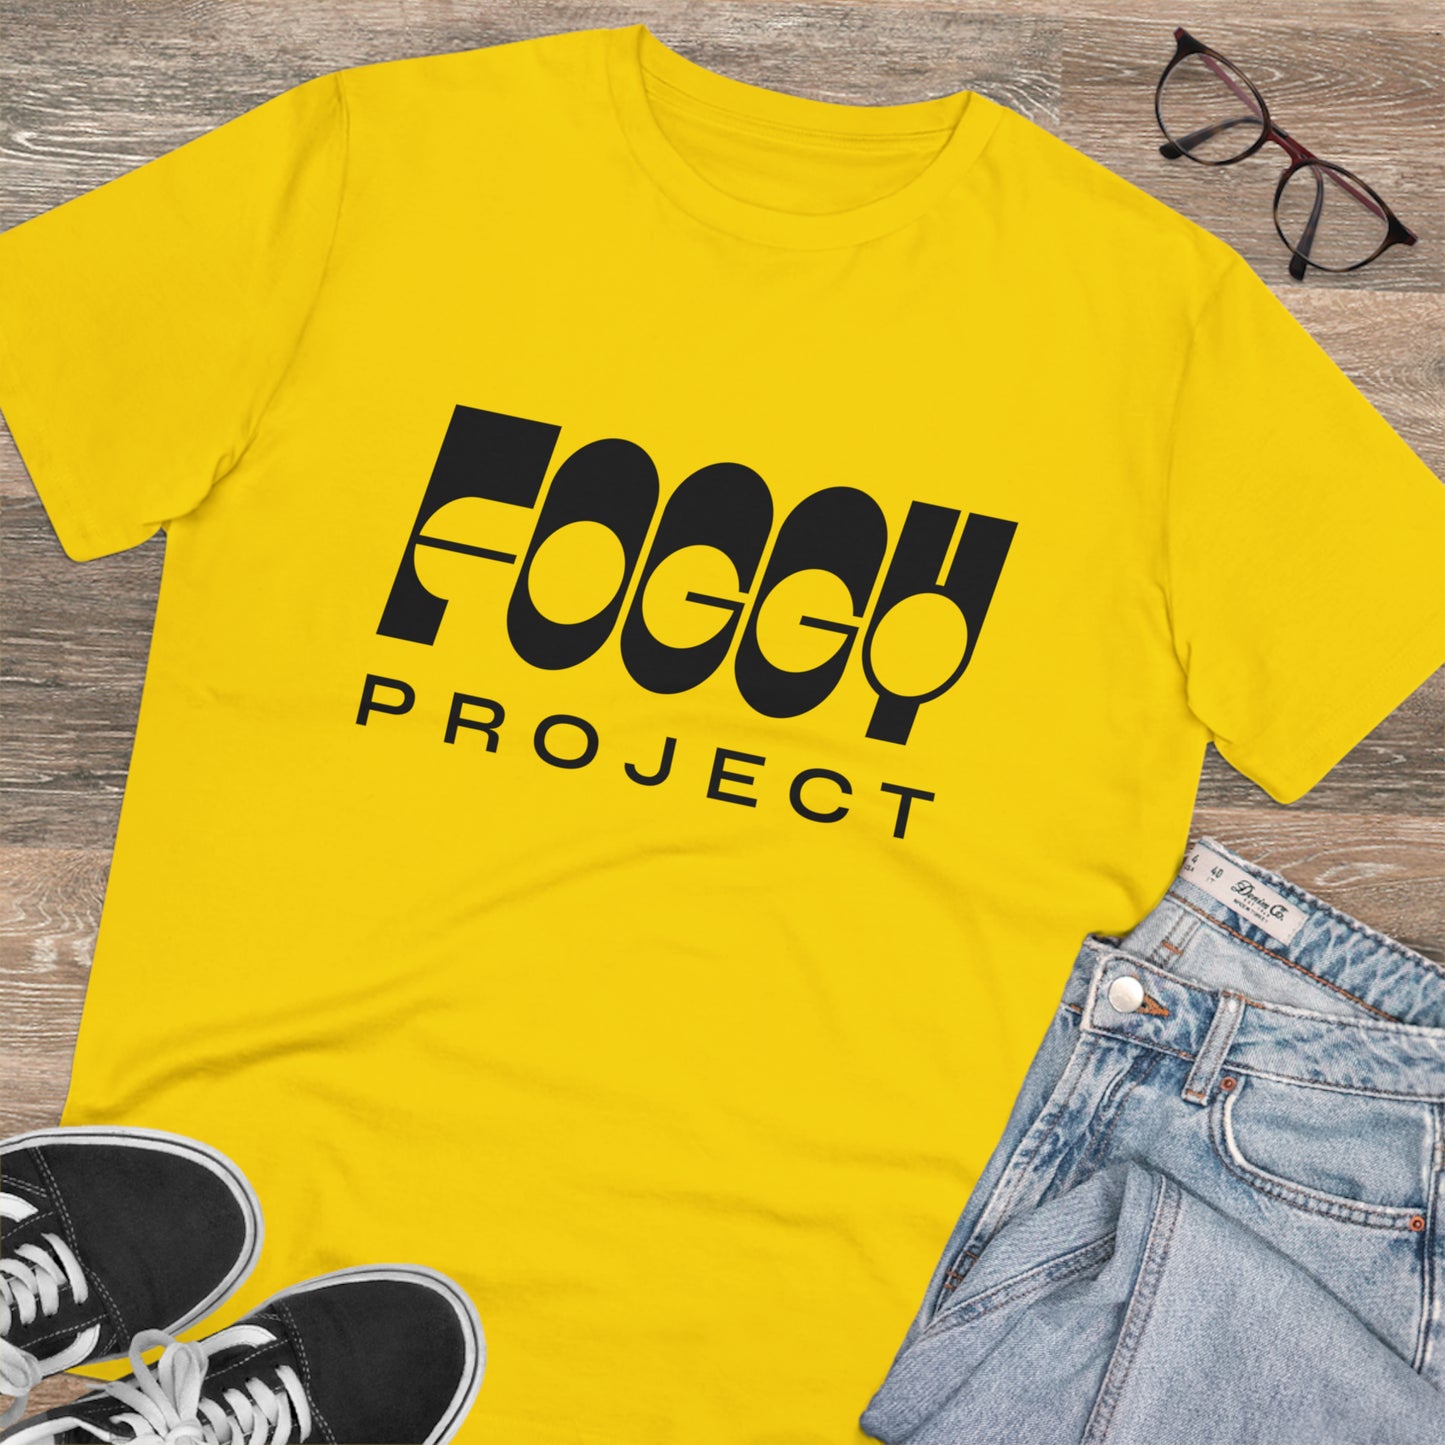 Foggy Project's Logo T-shirt Unisex Yellow